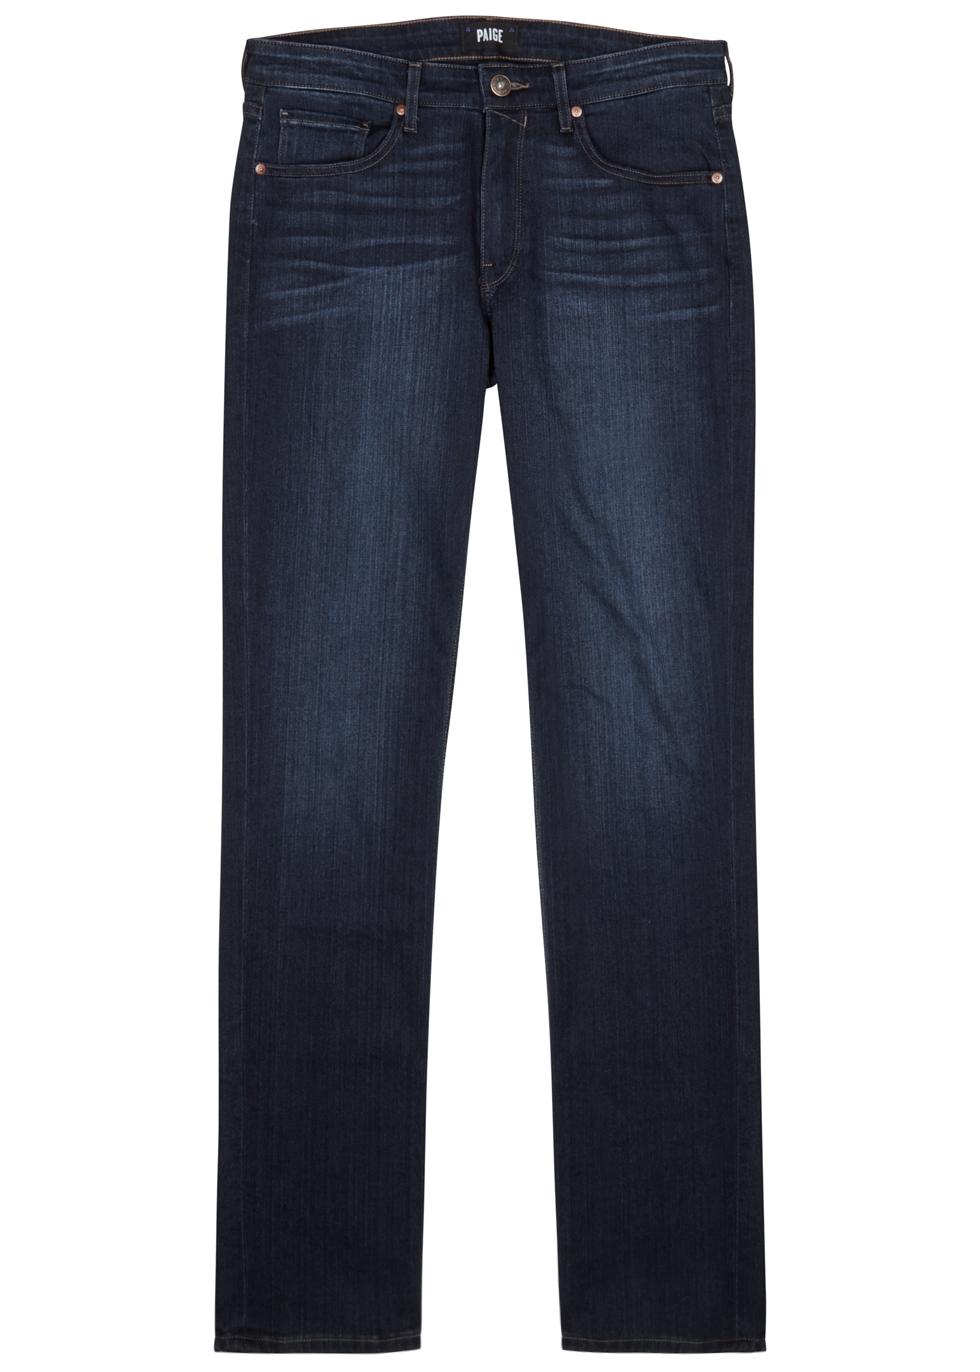 PAIGE Denim Lennox Indigo Slim-leg Jeans in Blue for Men - Save 2% - Lyst